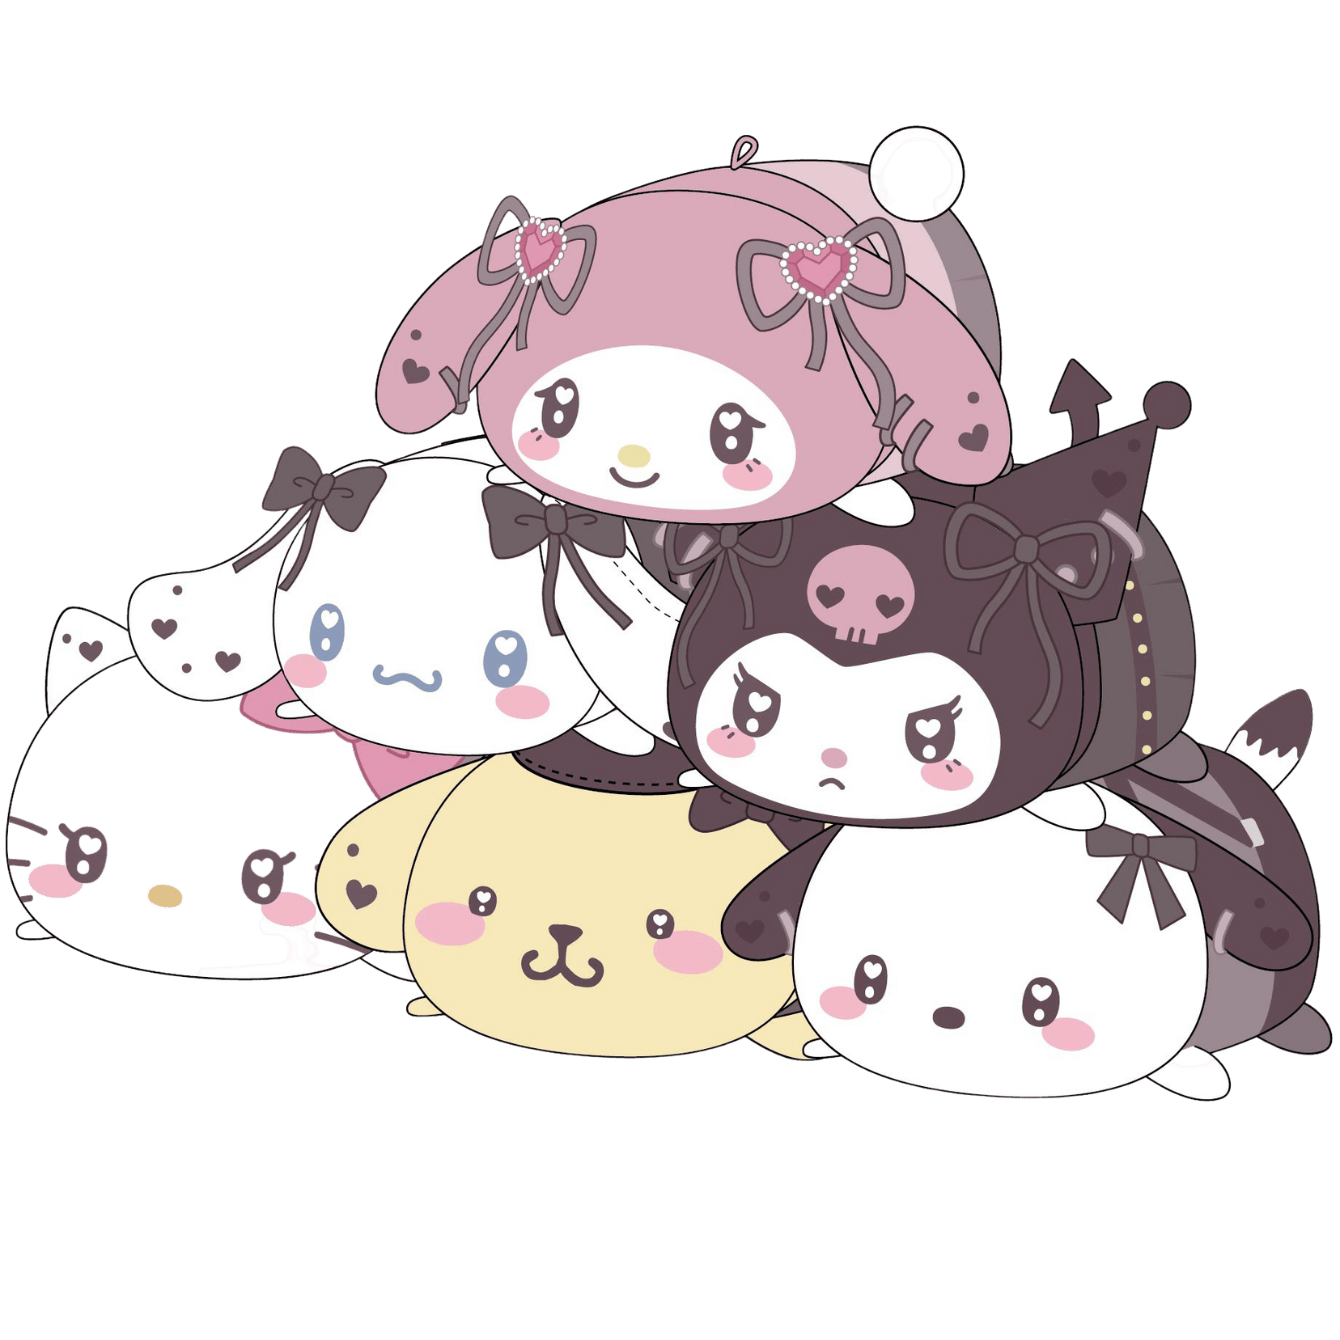 A group of kawaii cats on a green background - Sanrio, kawaii